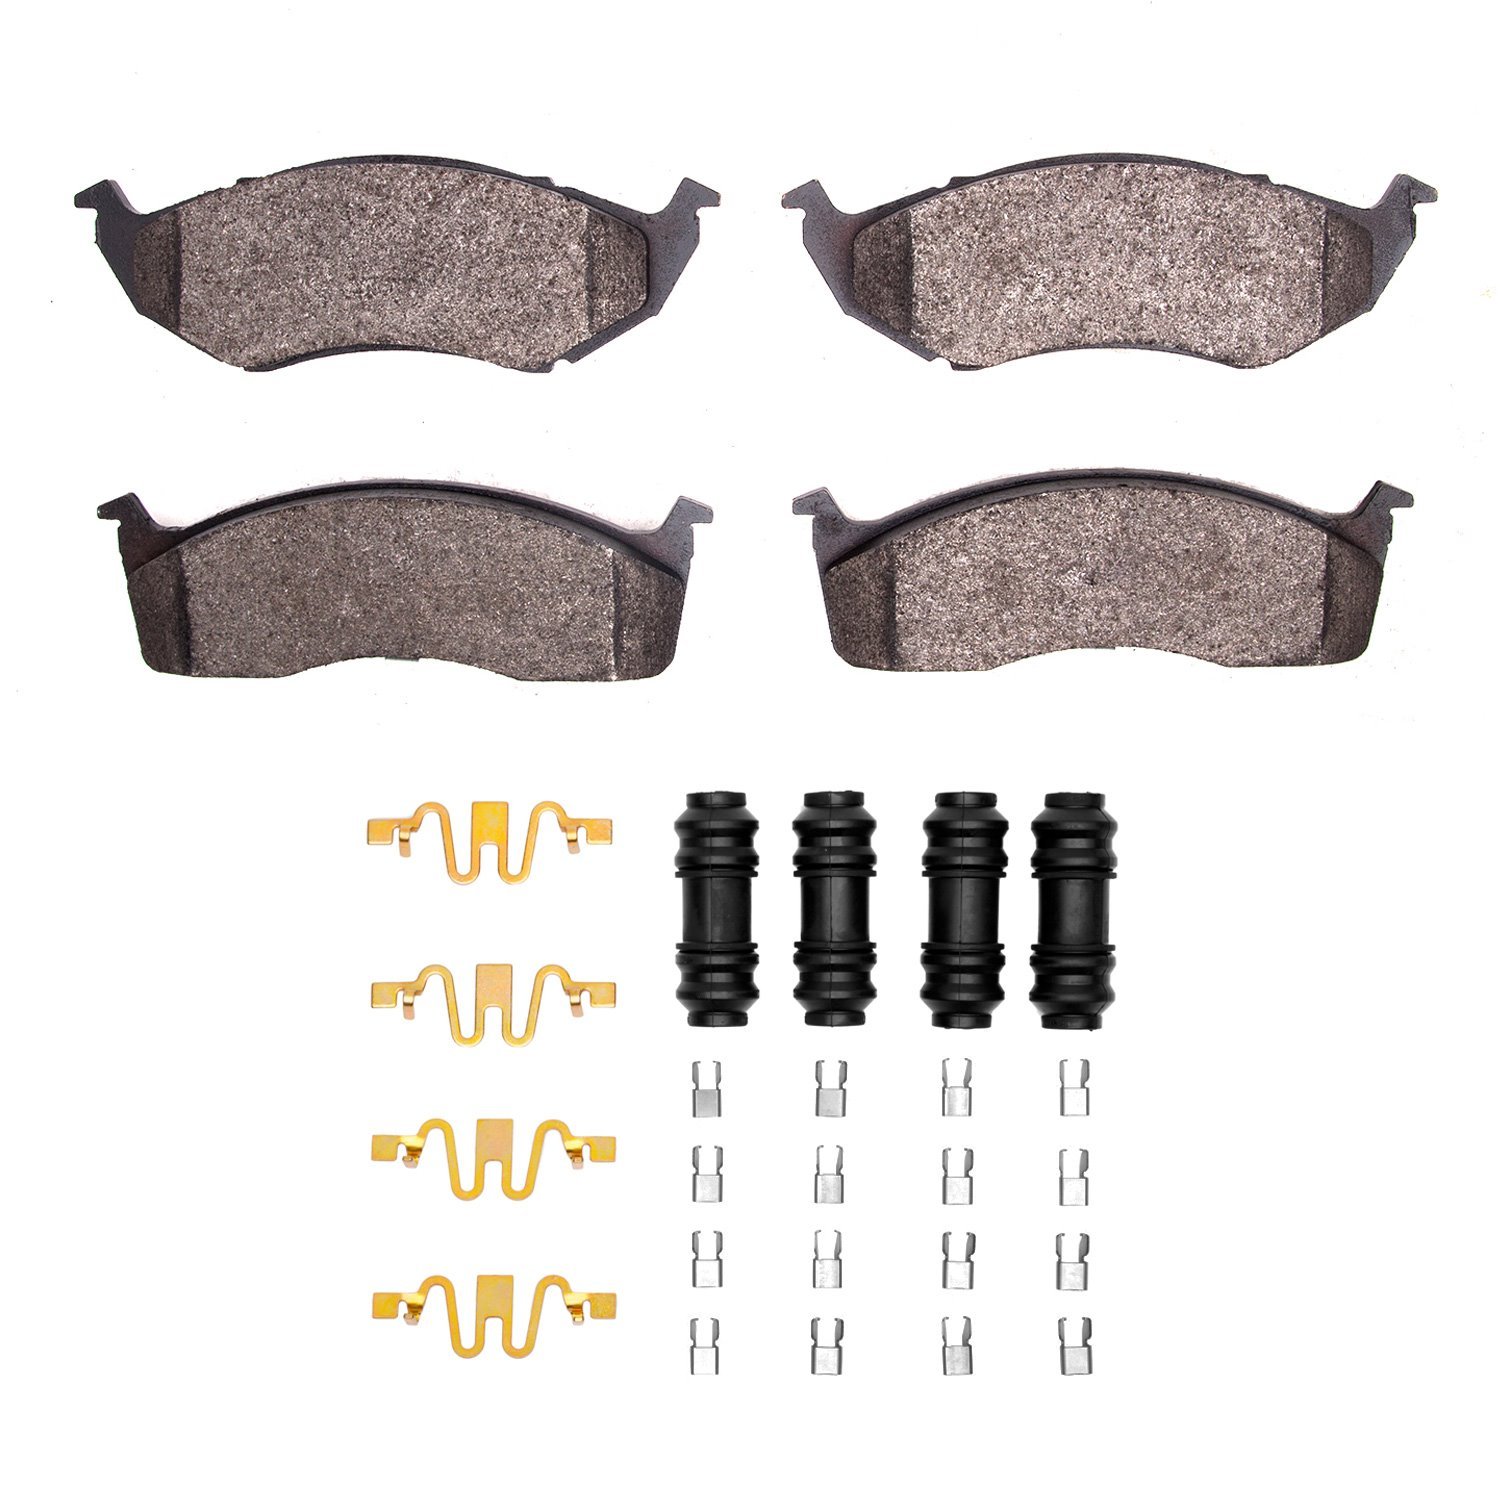 1310-0591-01 3000-Series Ceramic Brake Pads & Hardware Kit, 1993-2002 Multiple Makes/Models, Position: Front